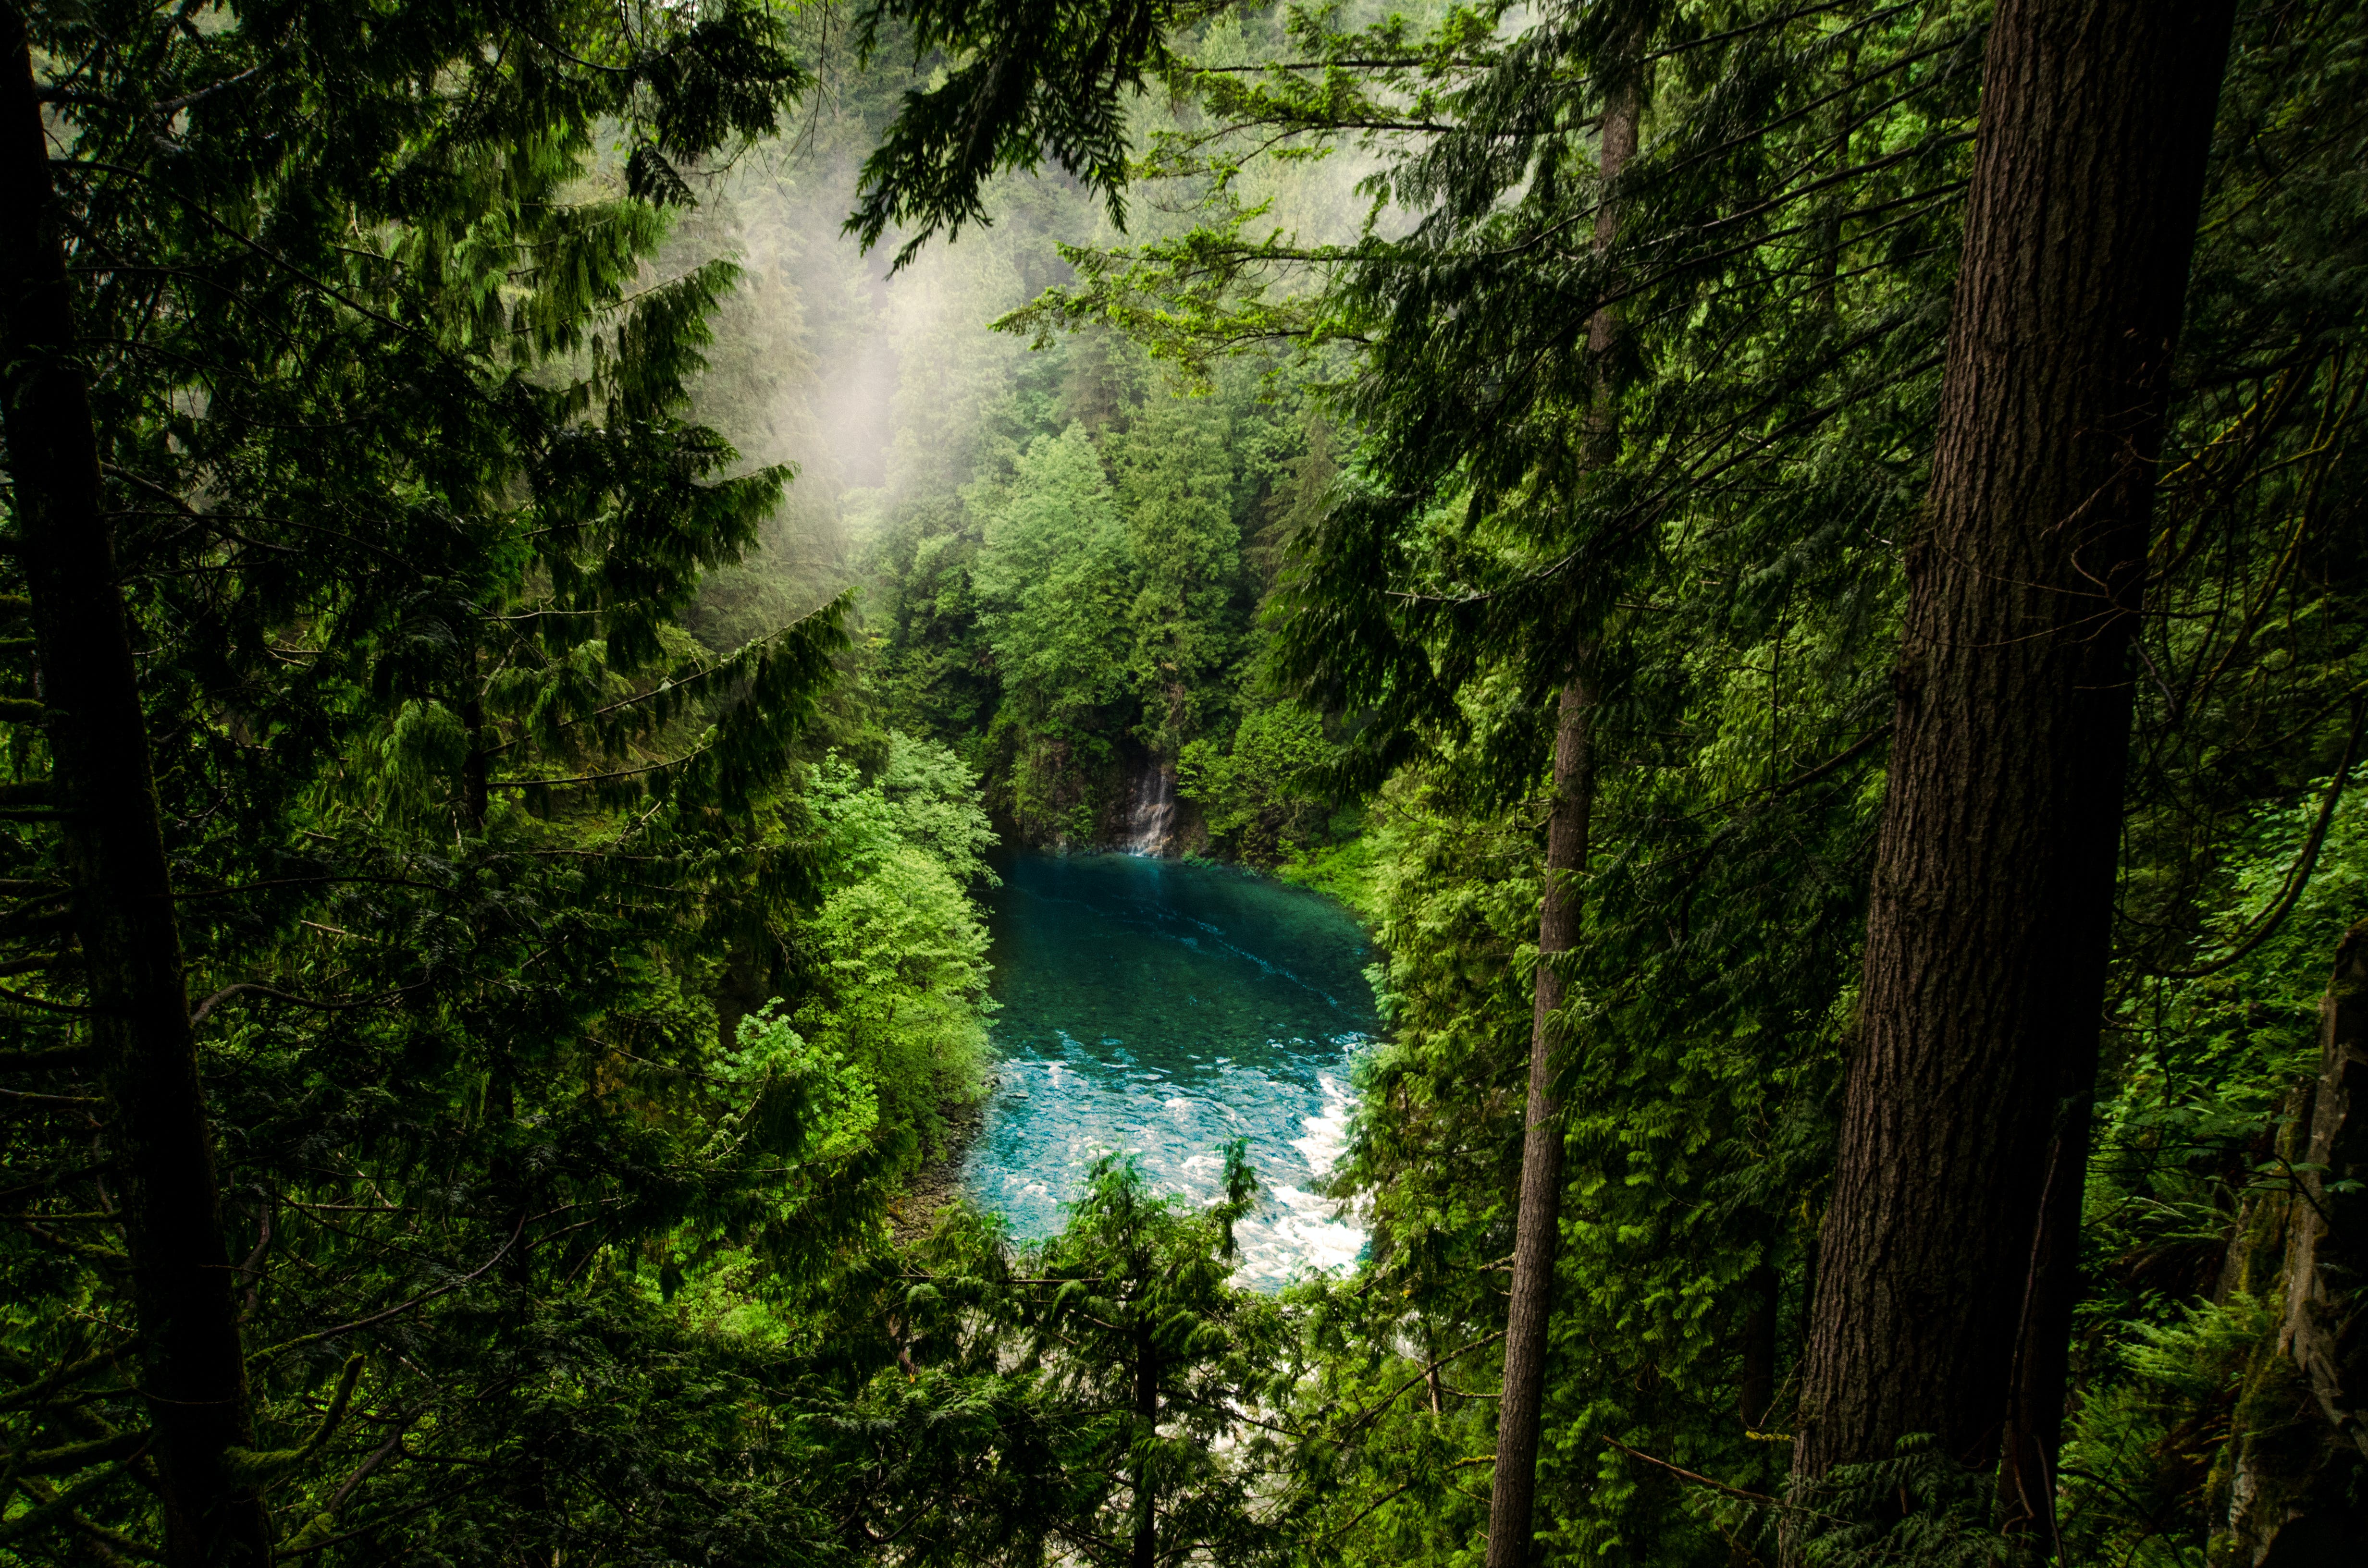 A photo of a river peeking through trees in a rainforest.